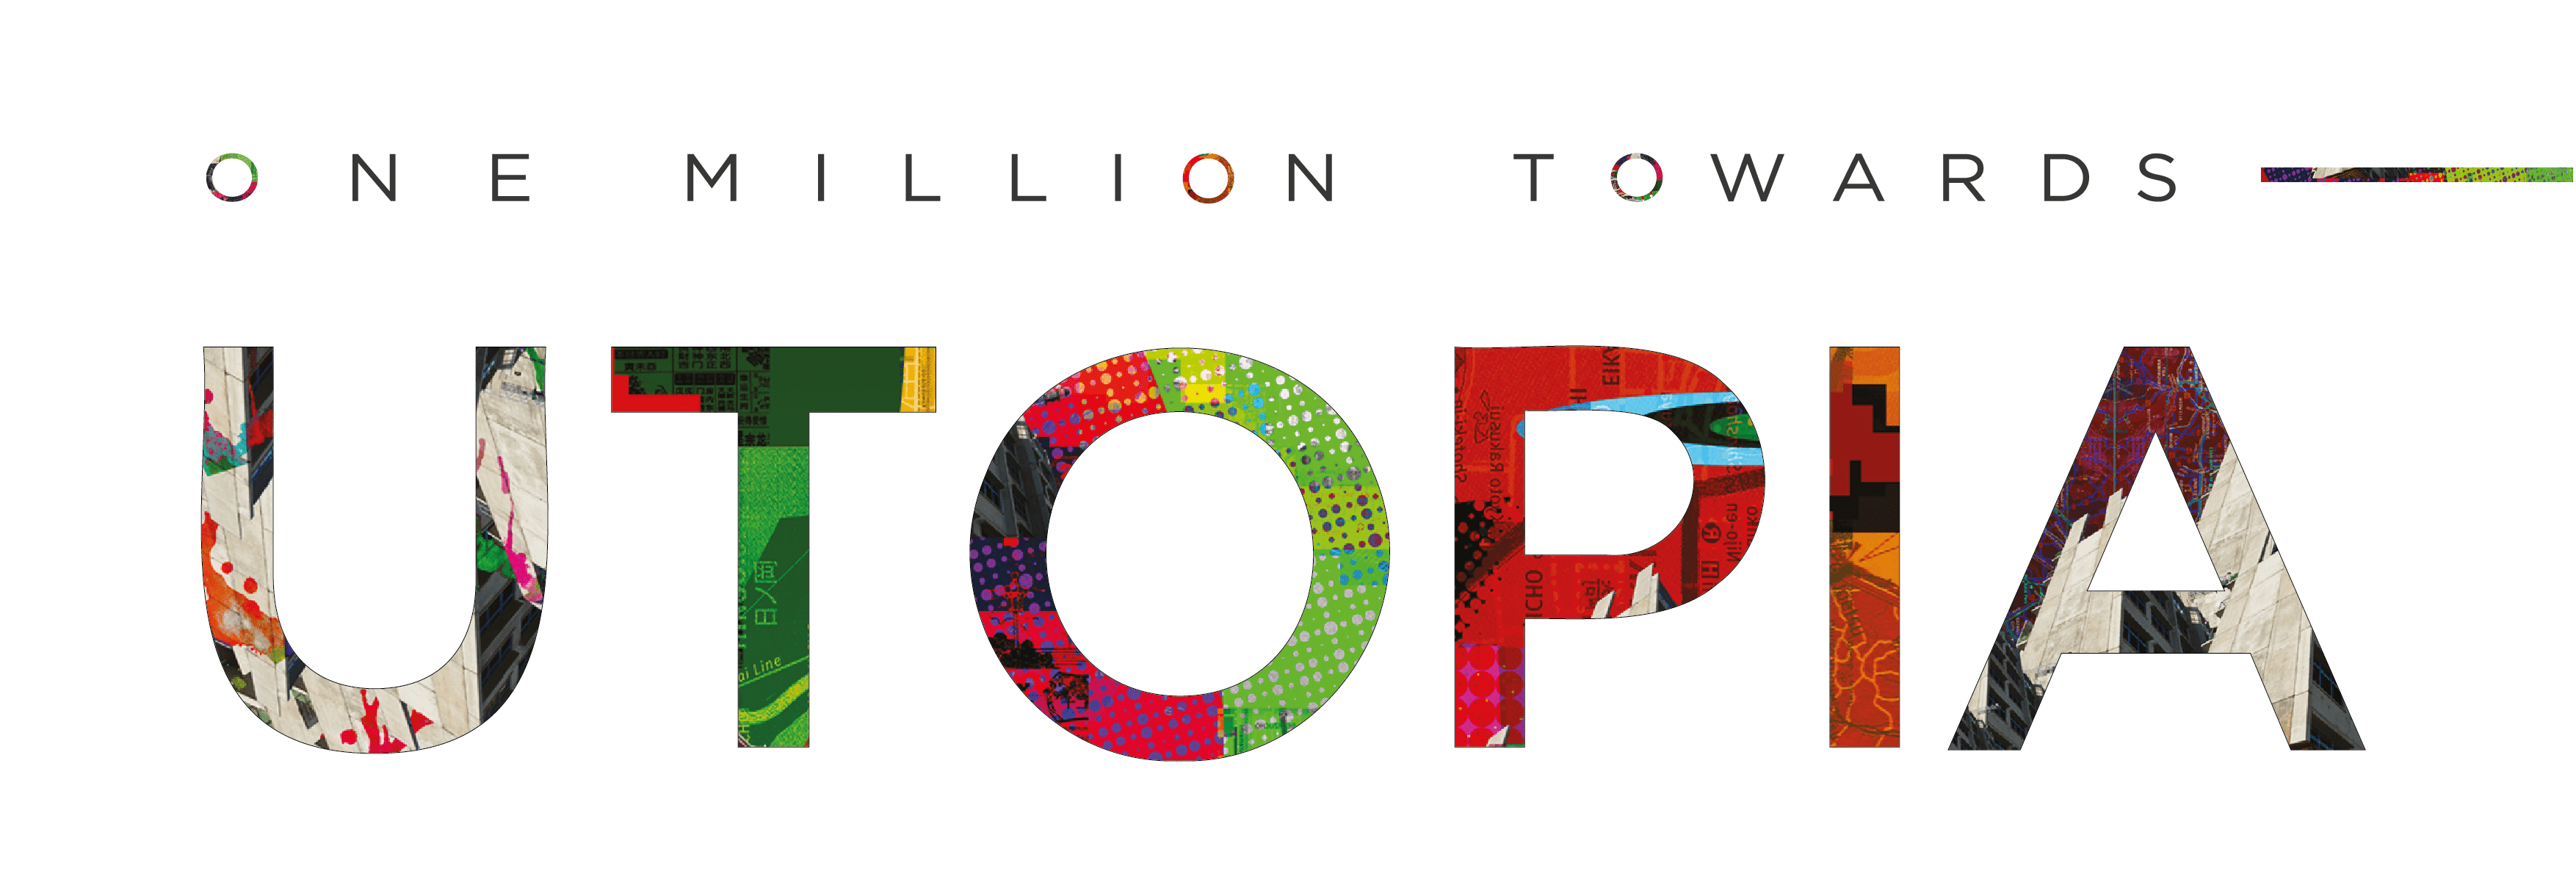 The Foundation's One Million Towards UTOPIA